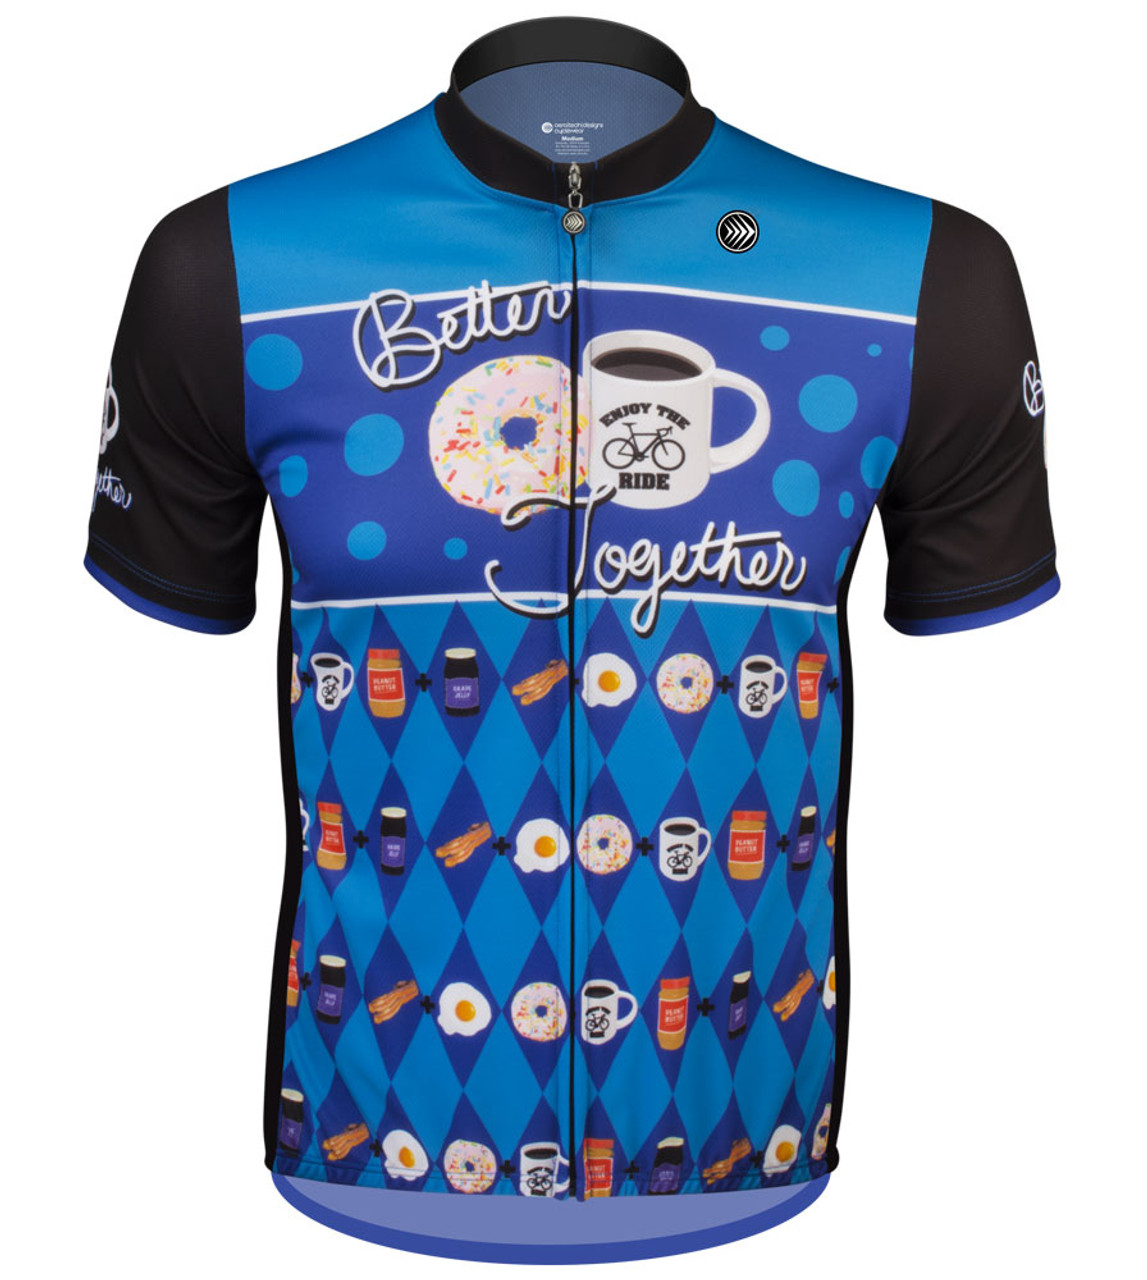 Schouderophalend ei Flitsend ATD Men's Tandem Cycling Jersey "Better Together" in Blue